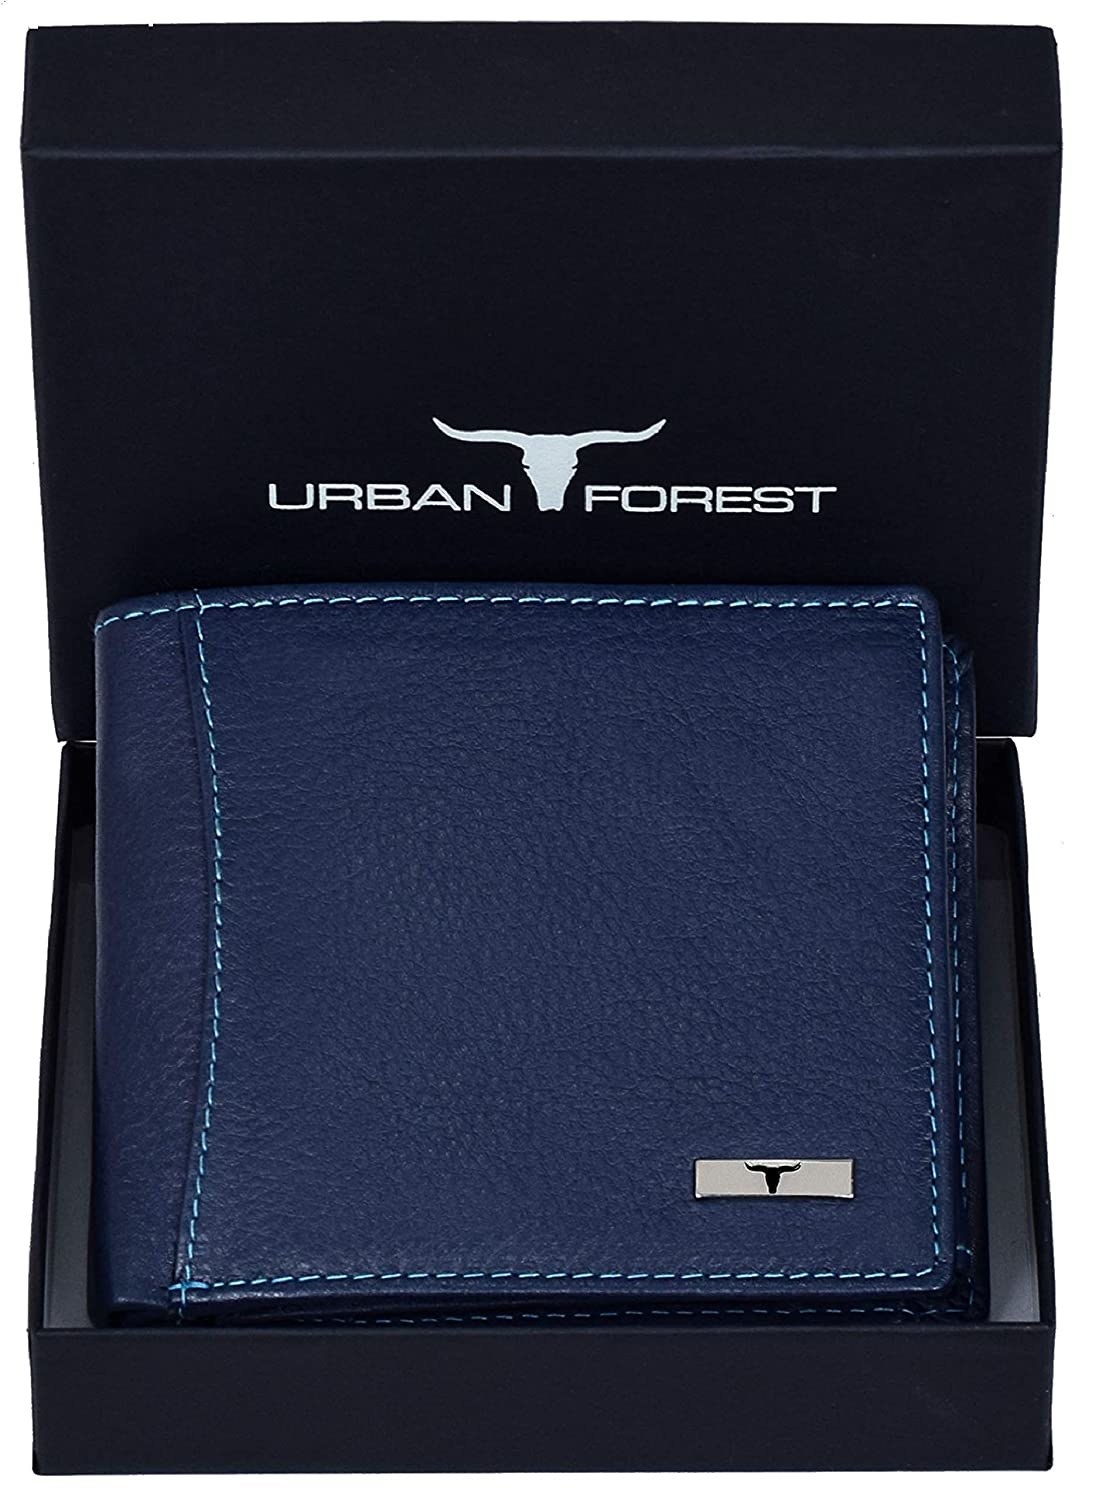 A blue faux leather wallet